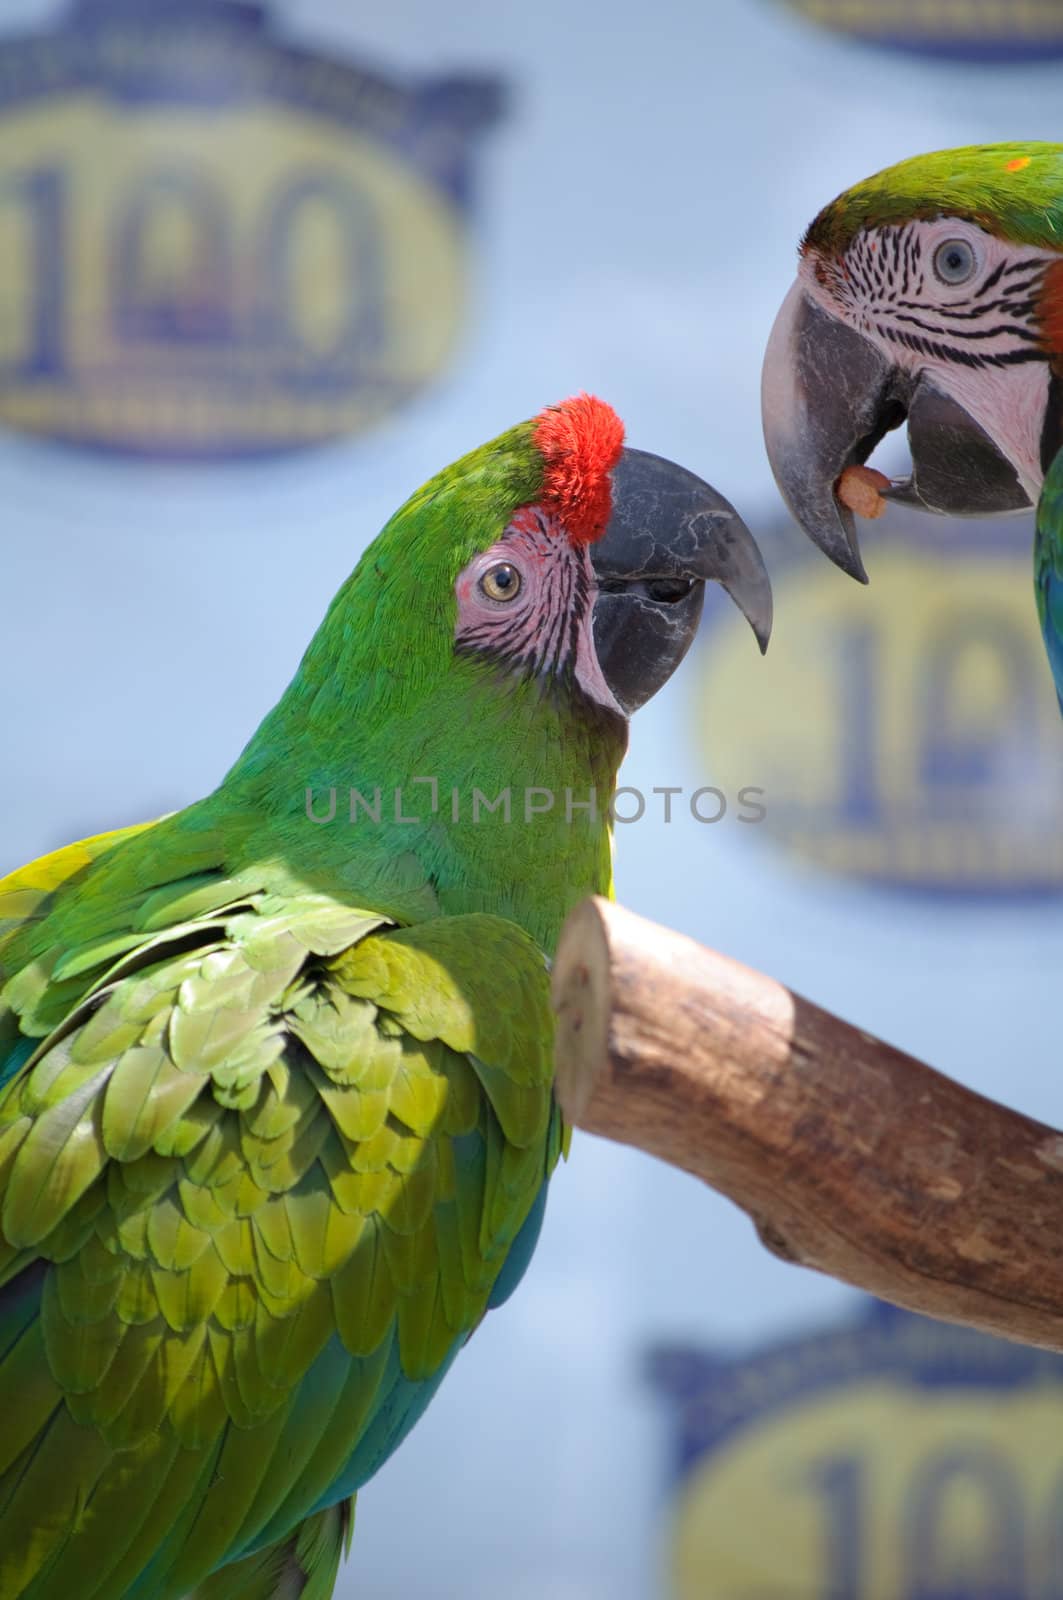 Beautiful colorful pet bird with companion on display